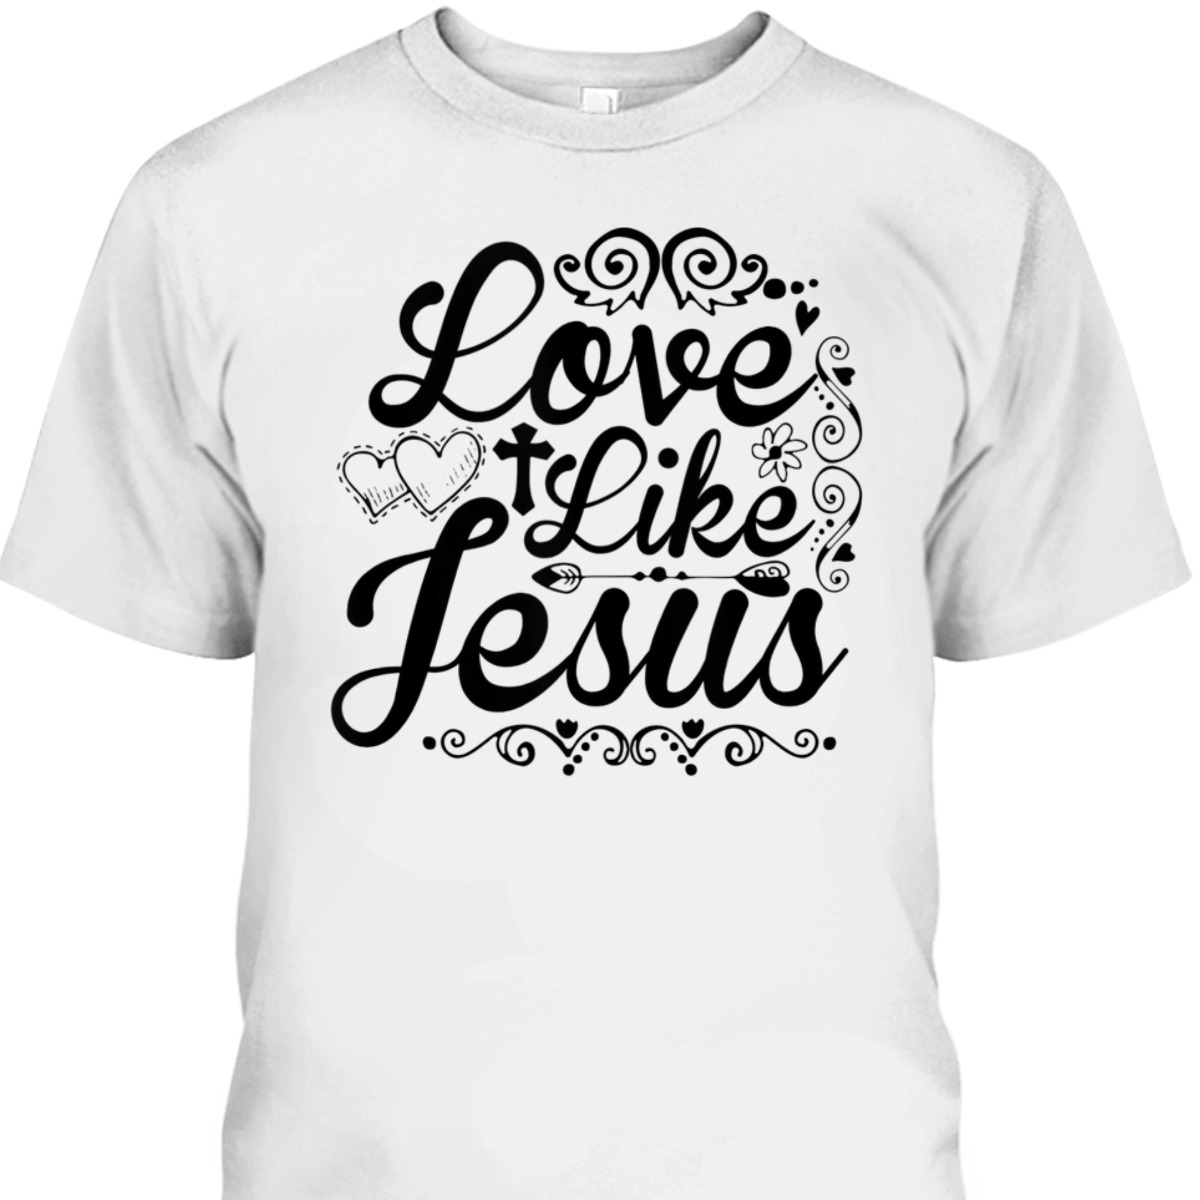 Love Like Jesus Best T-Shirt For Jesus Lovers